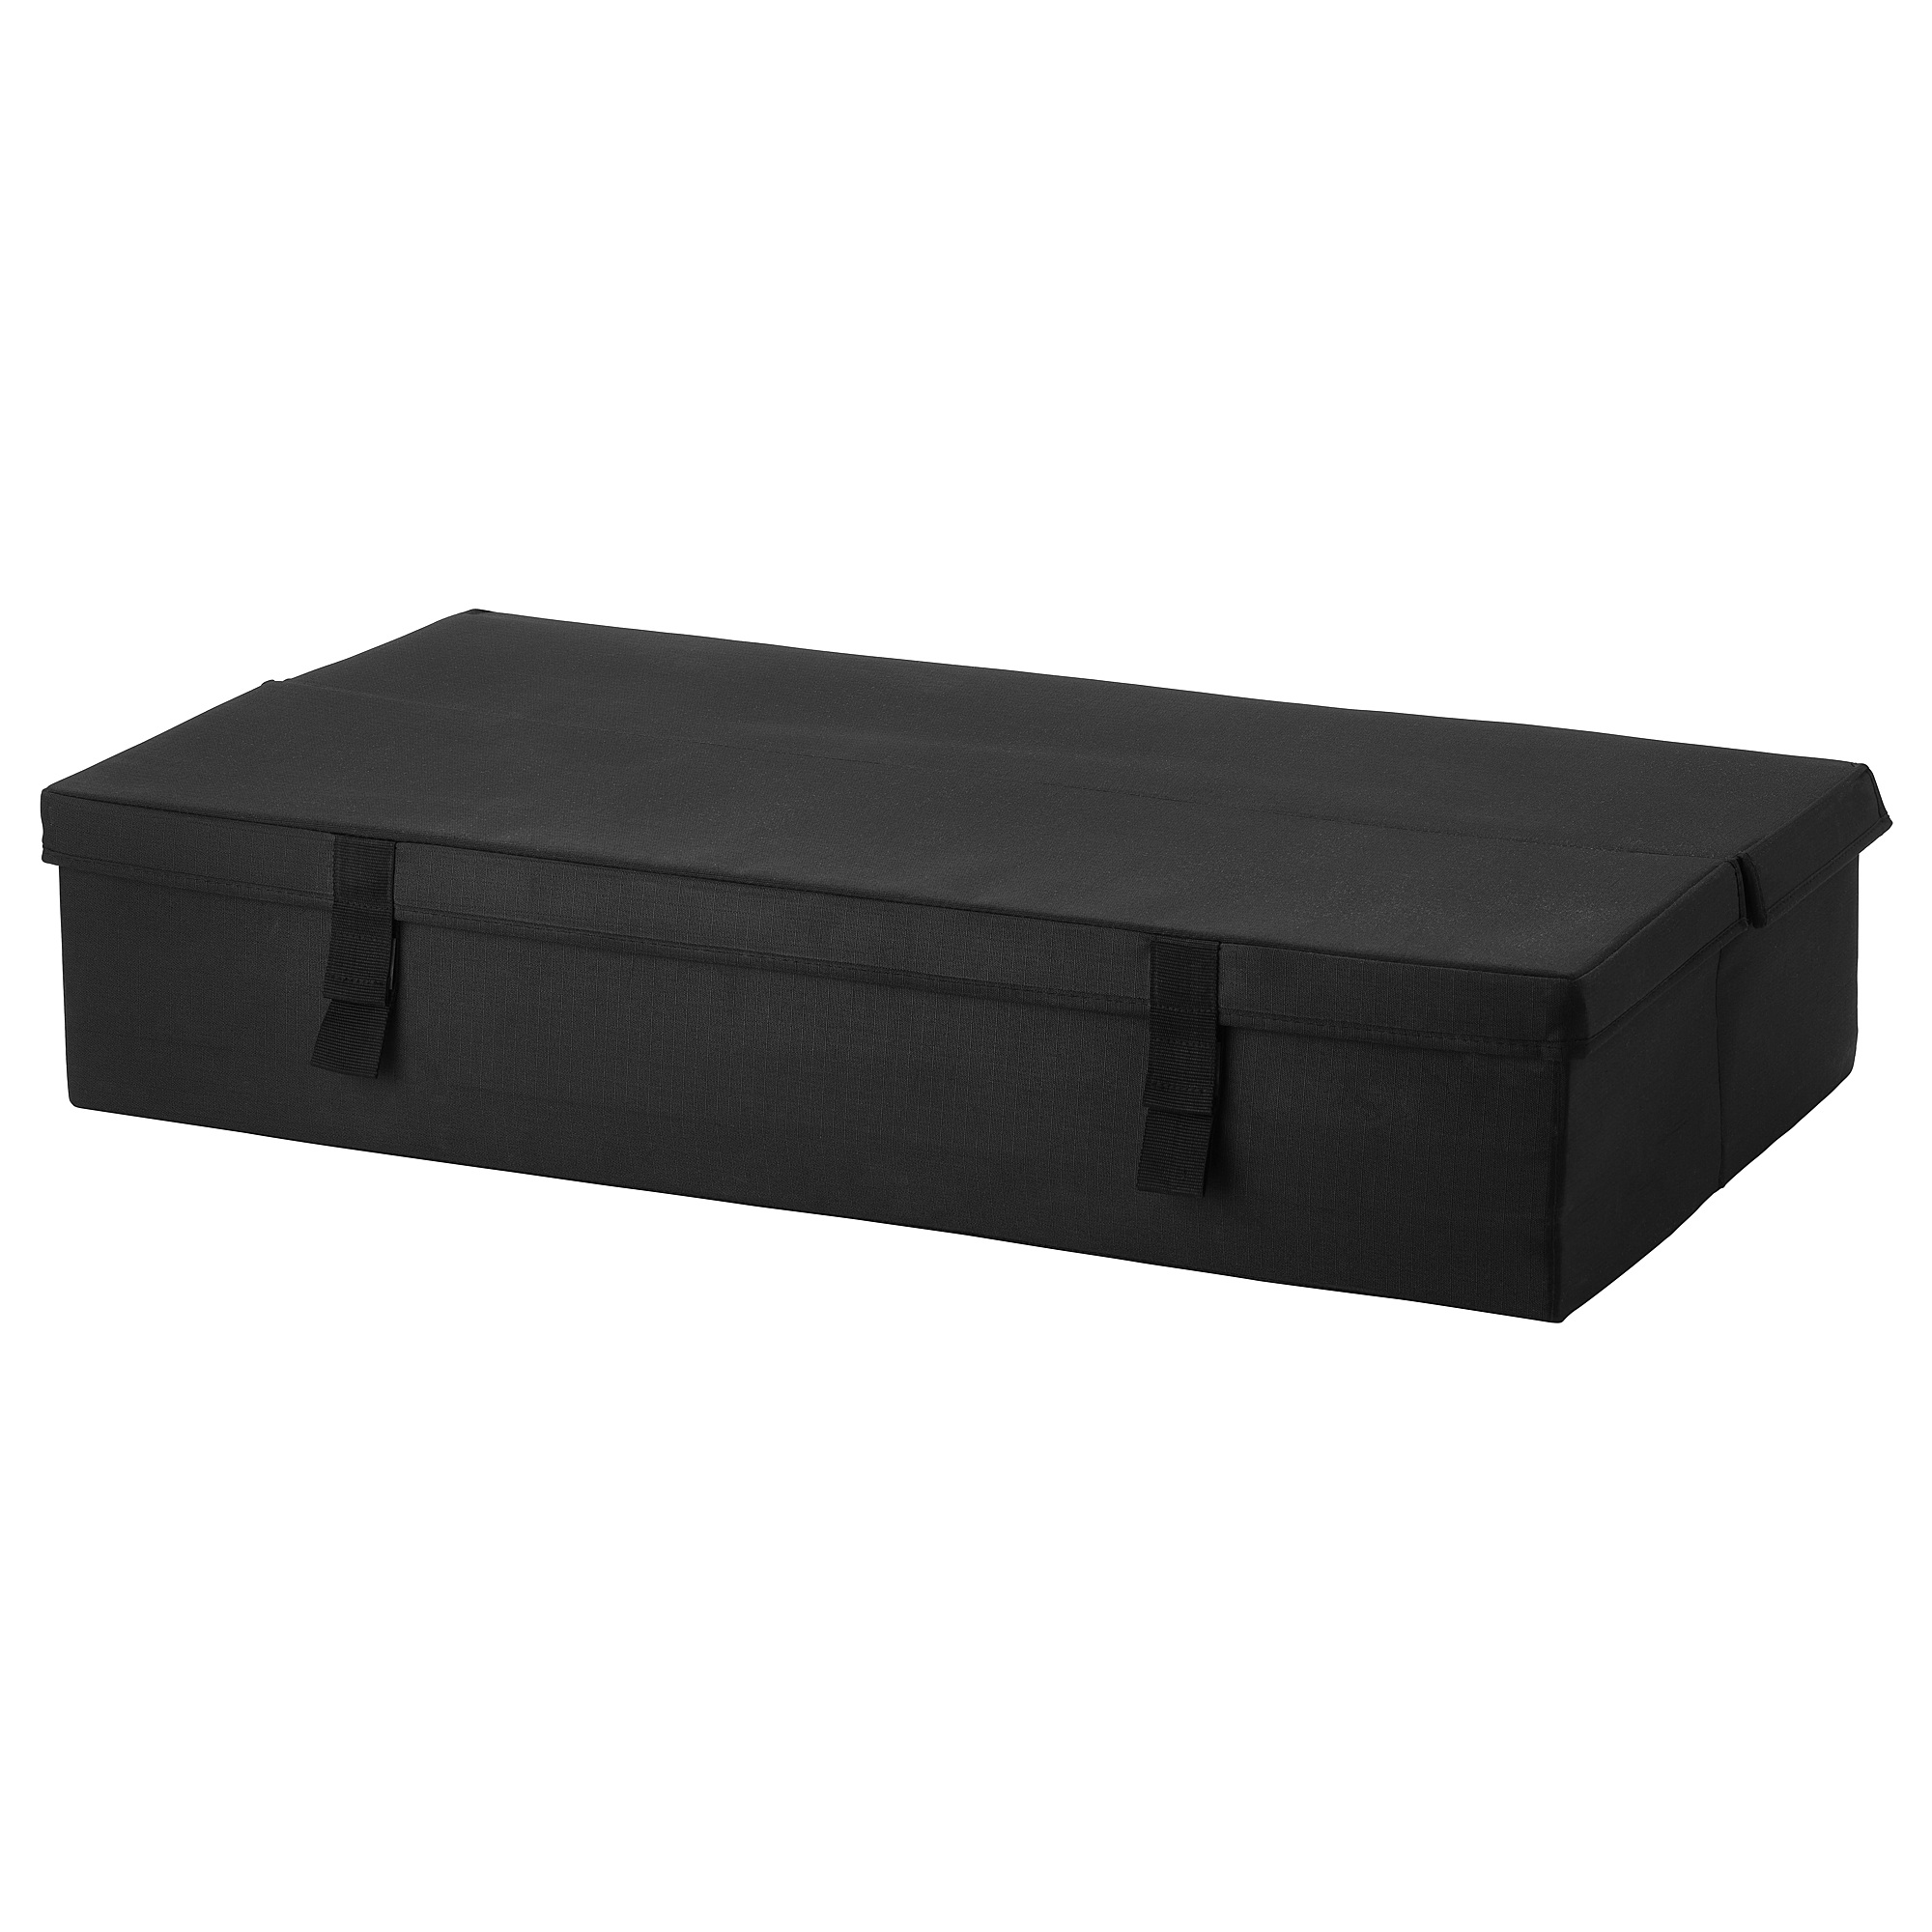 LYCKSELE storage box 2-seat sofa-bed